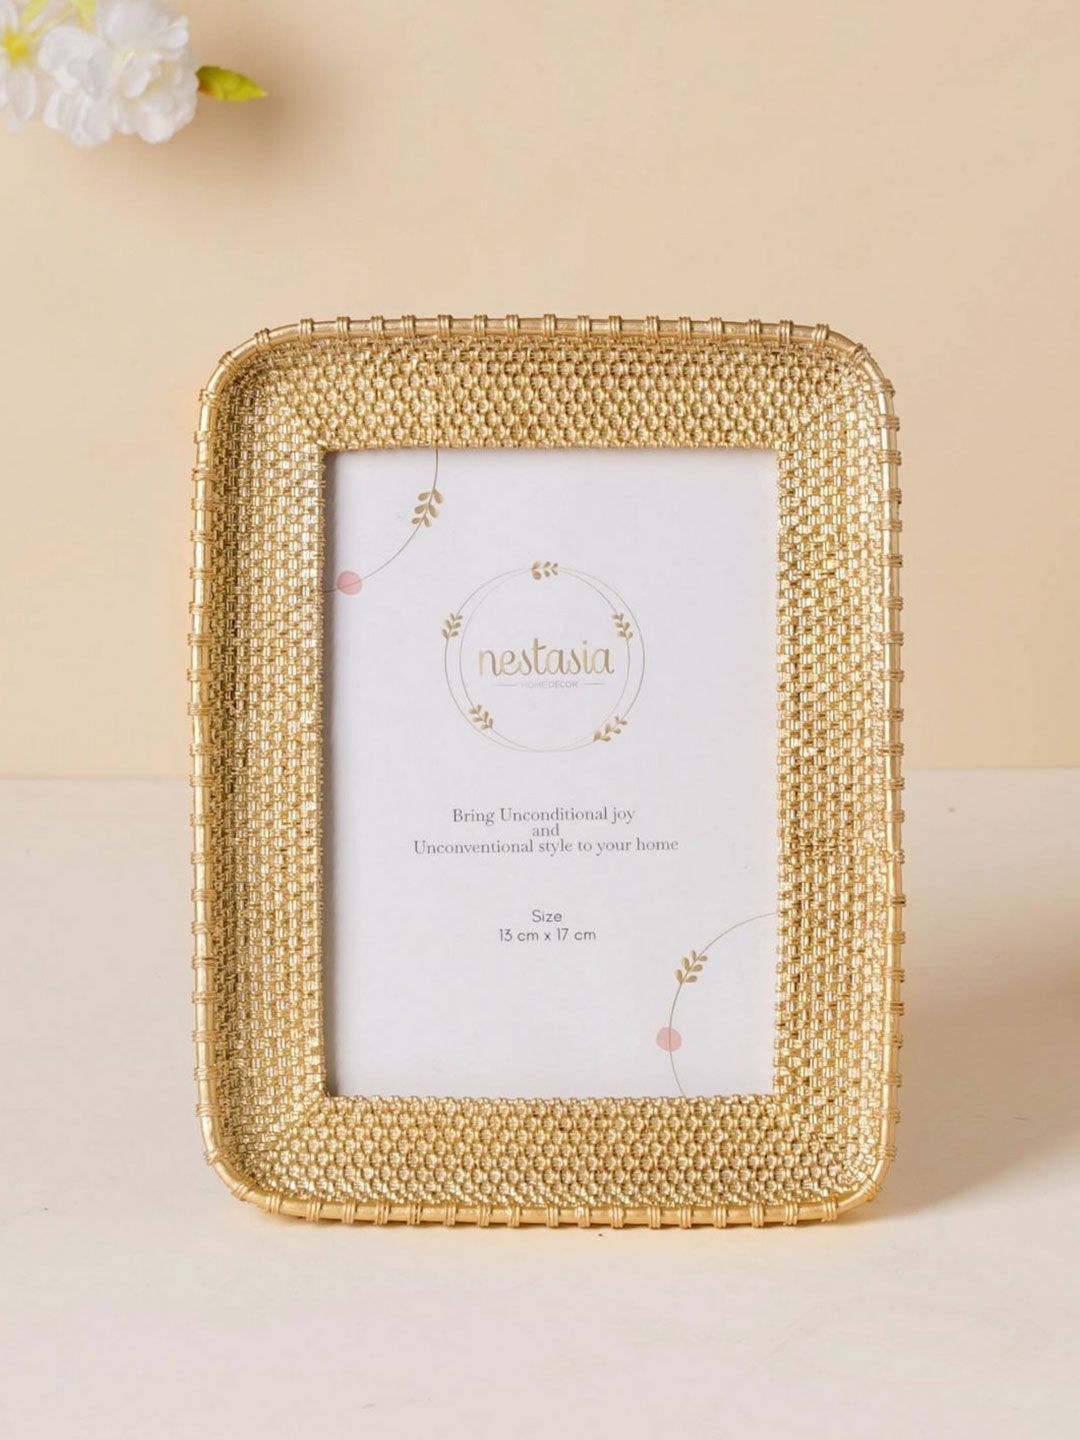 Nestasia Gold-Toned Rectangle Basket Photo Frame Price in India